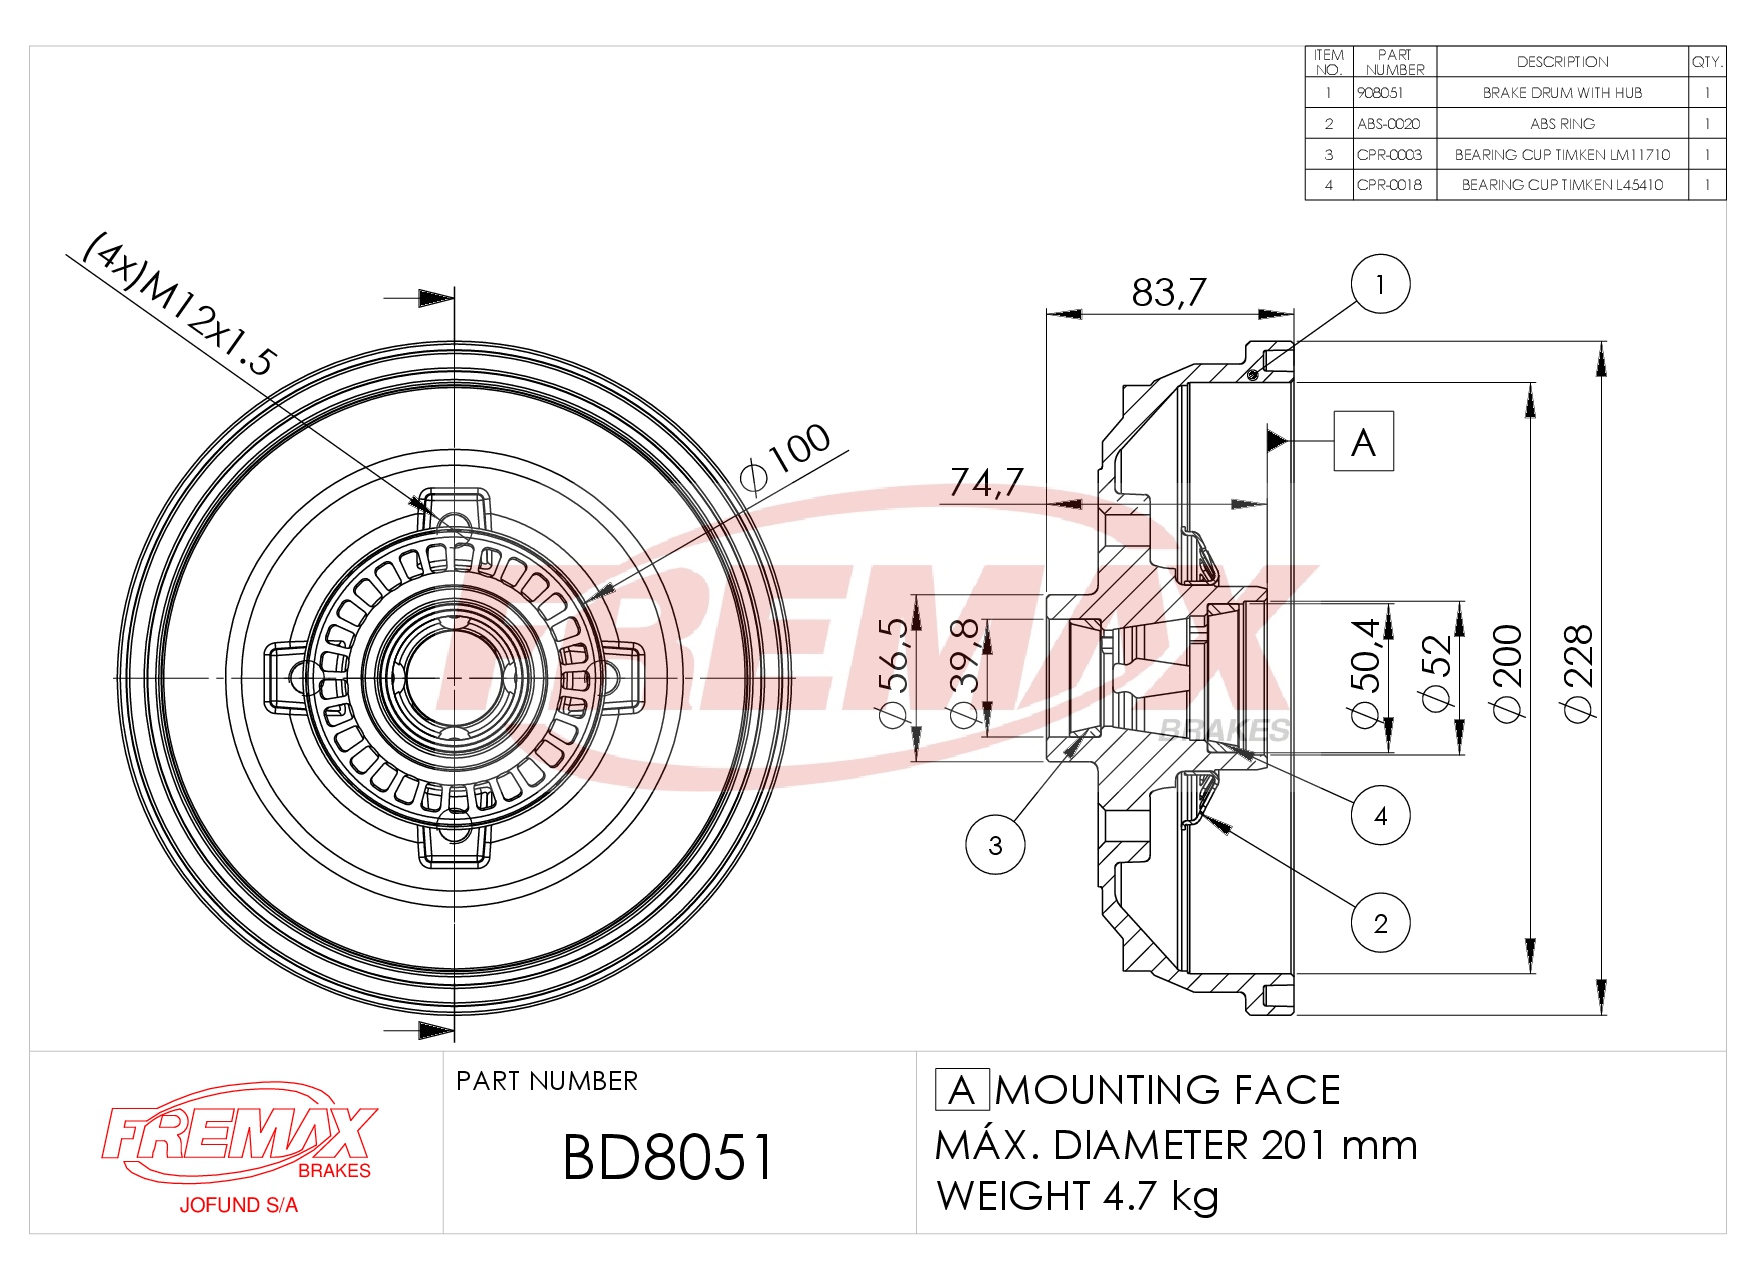 Immagine di BD-8051  B.DRUM HC  - COMPONENTS ABS RING (1),BEARING CUP  (2) für Opel Corsa B Abs 93-